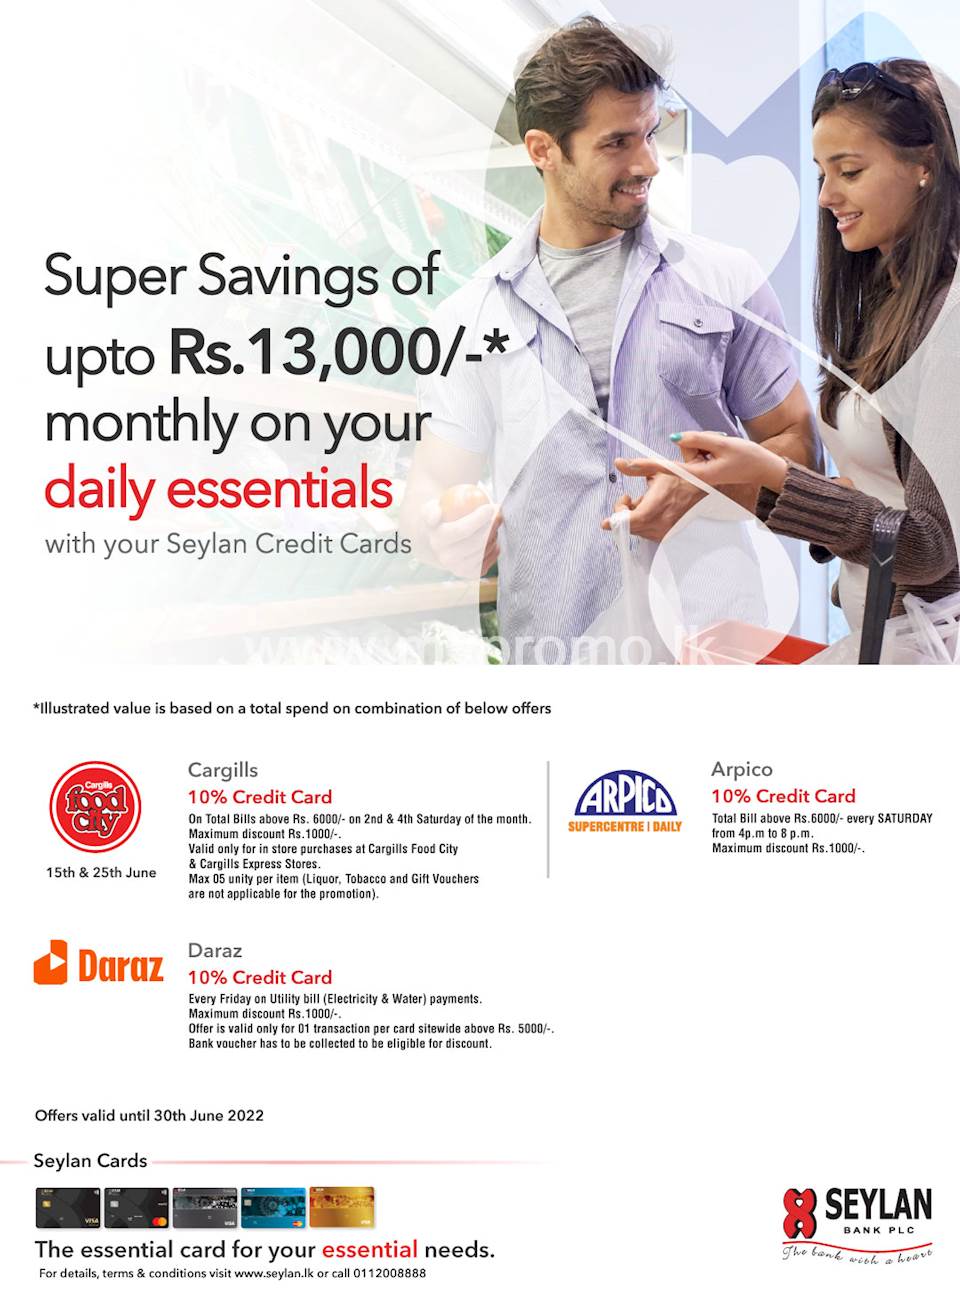 Enjoy super savings with your Seylan Credit Card at Cargills FoodCity, Daraz and Arpico!